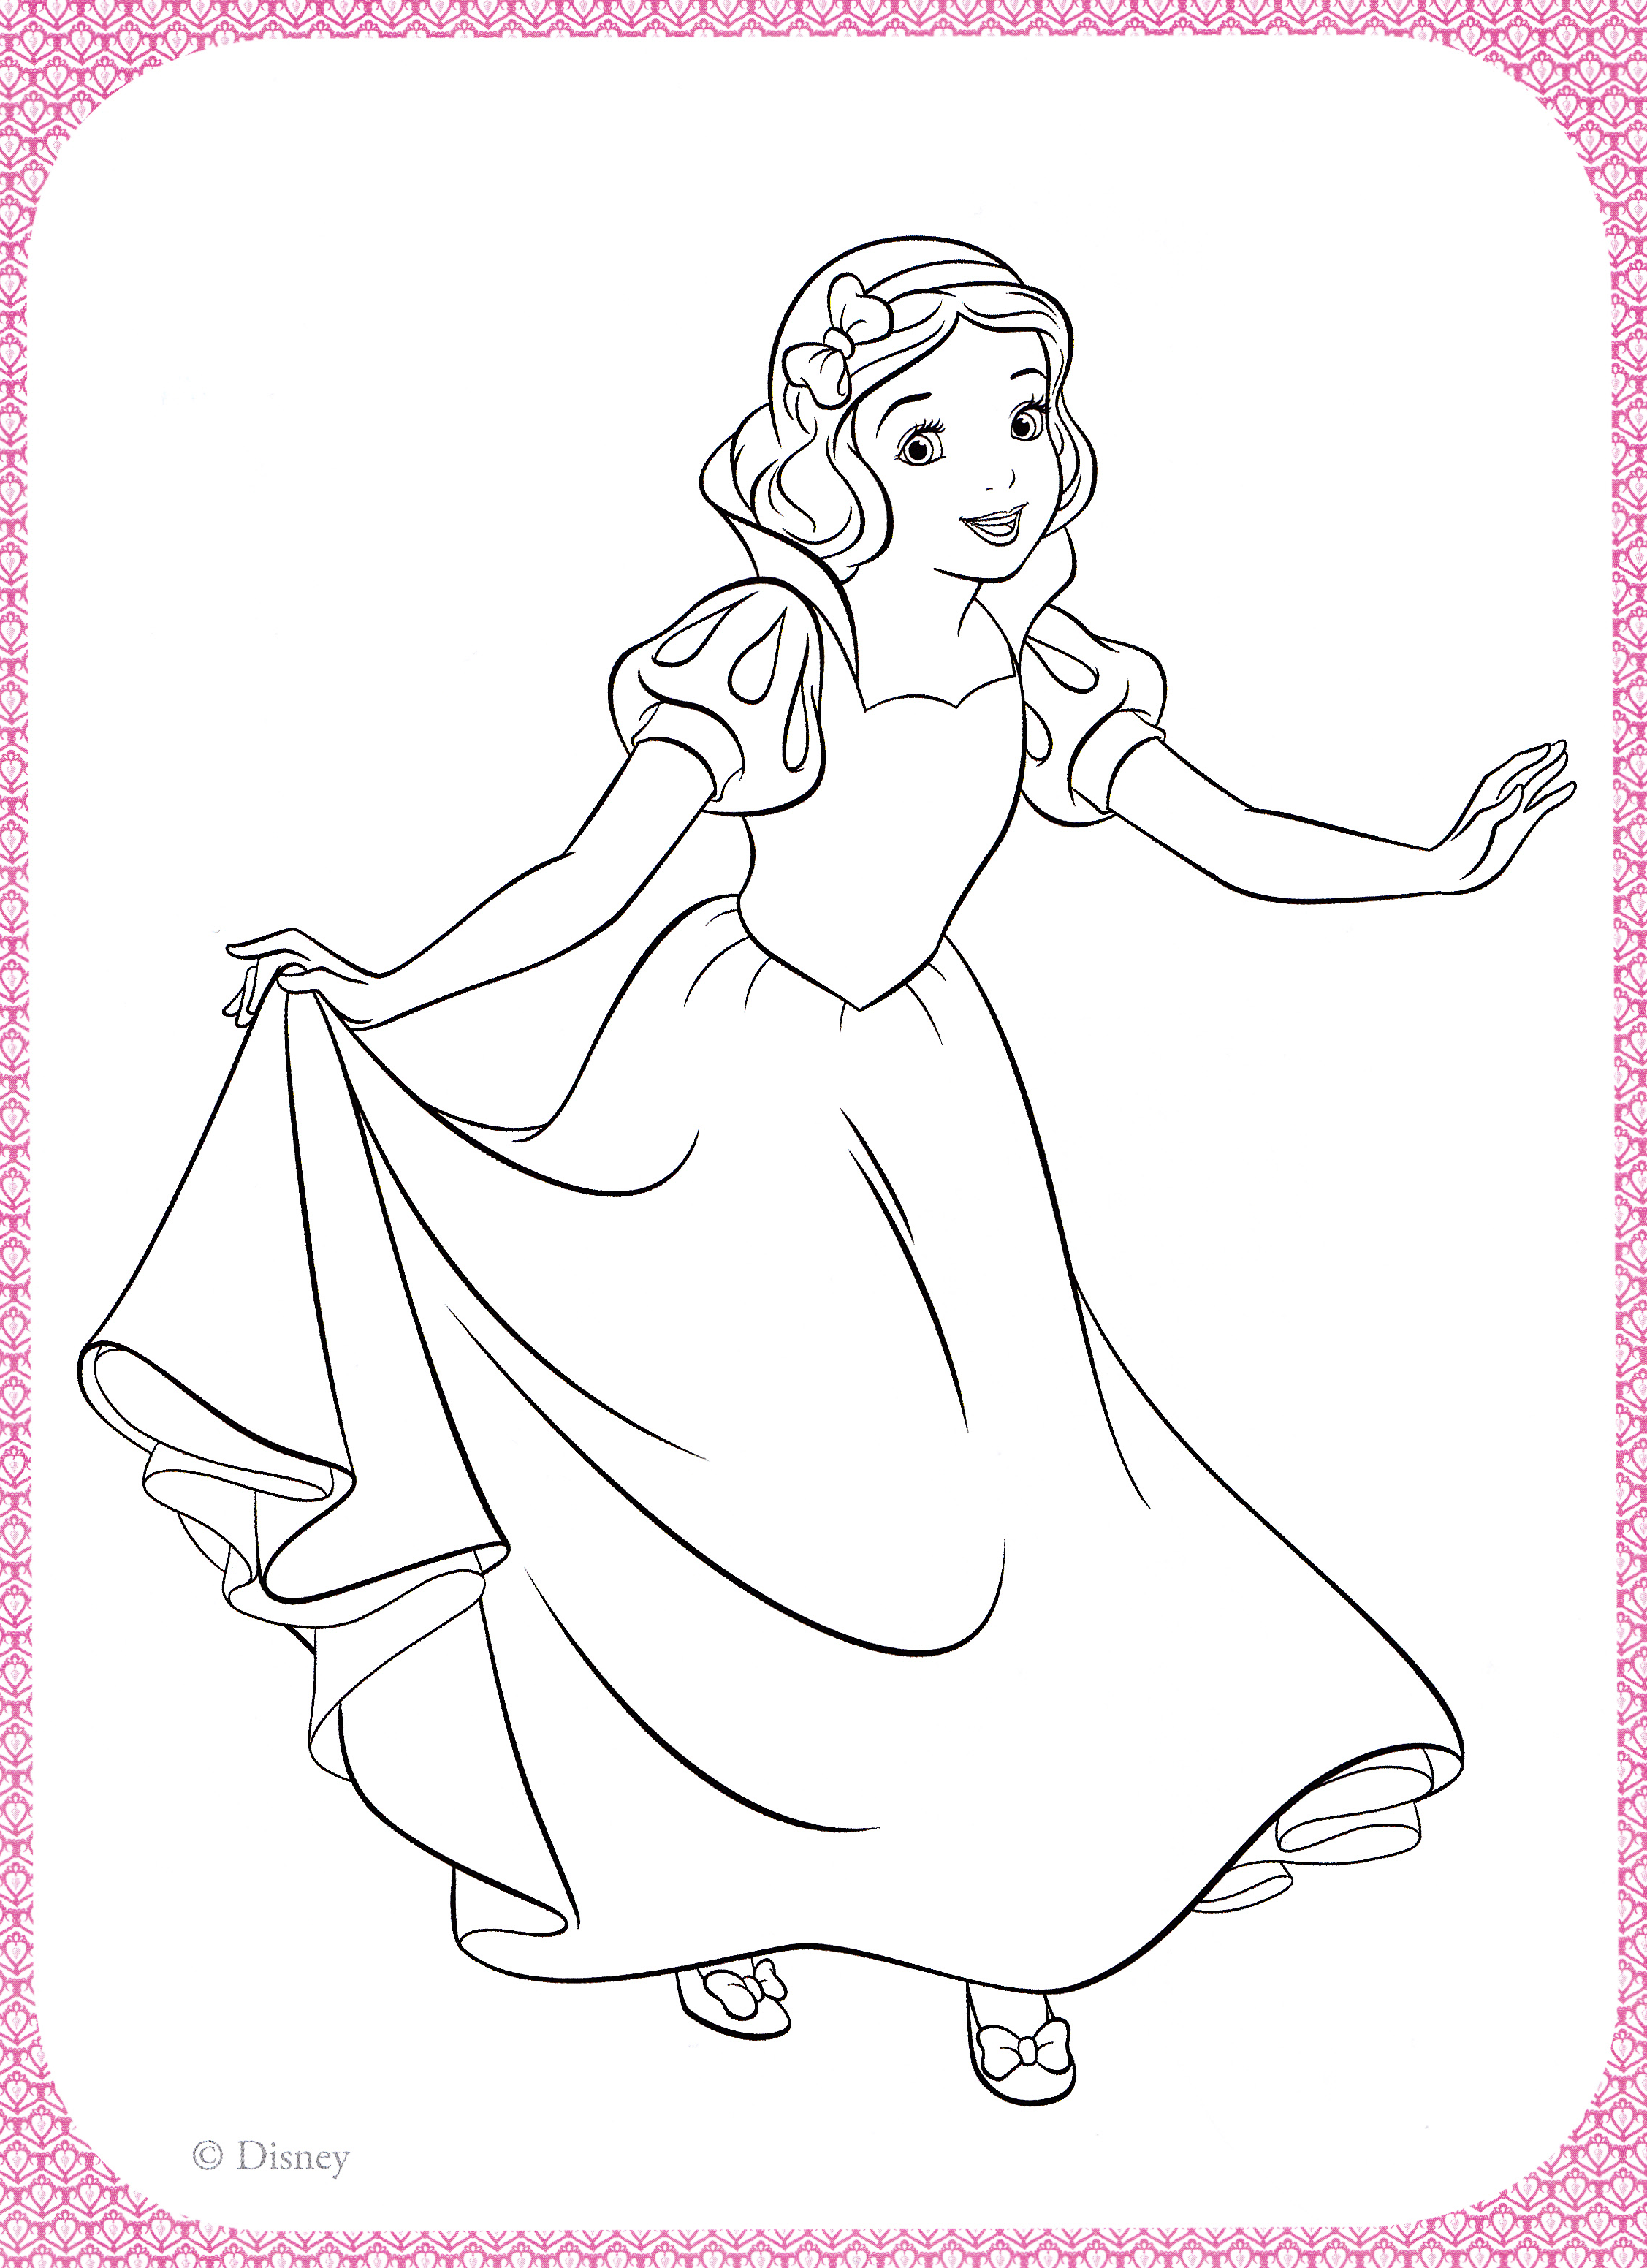 Walt Disney Coloring Pages   Princess Snow White   Walt Disney ...